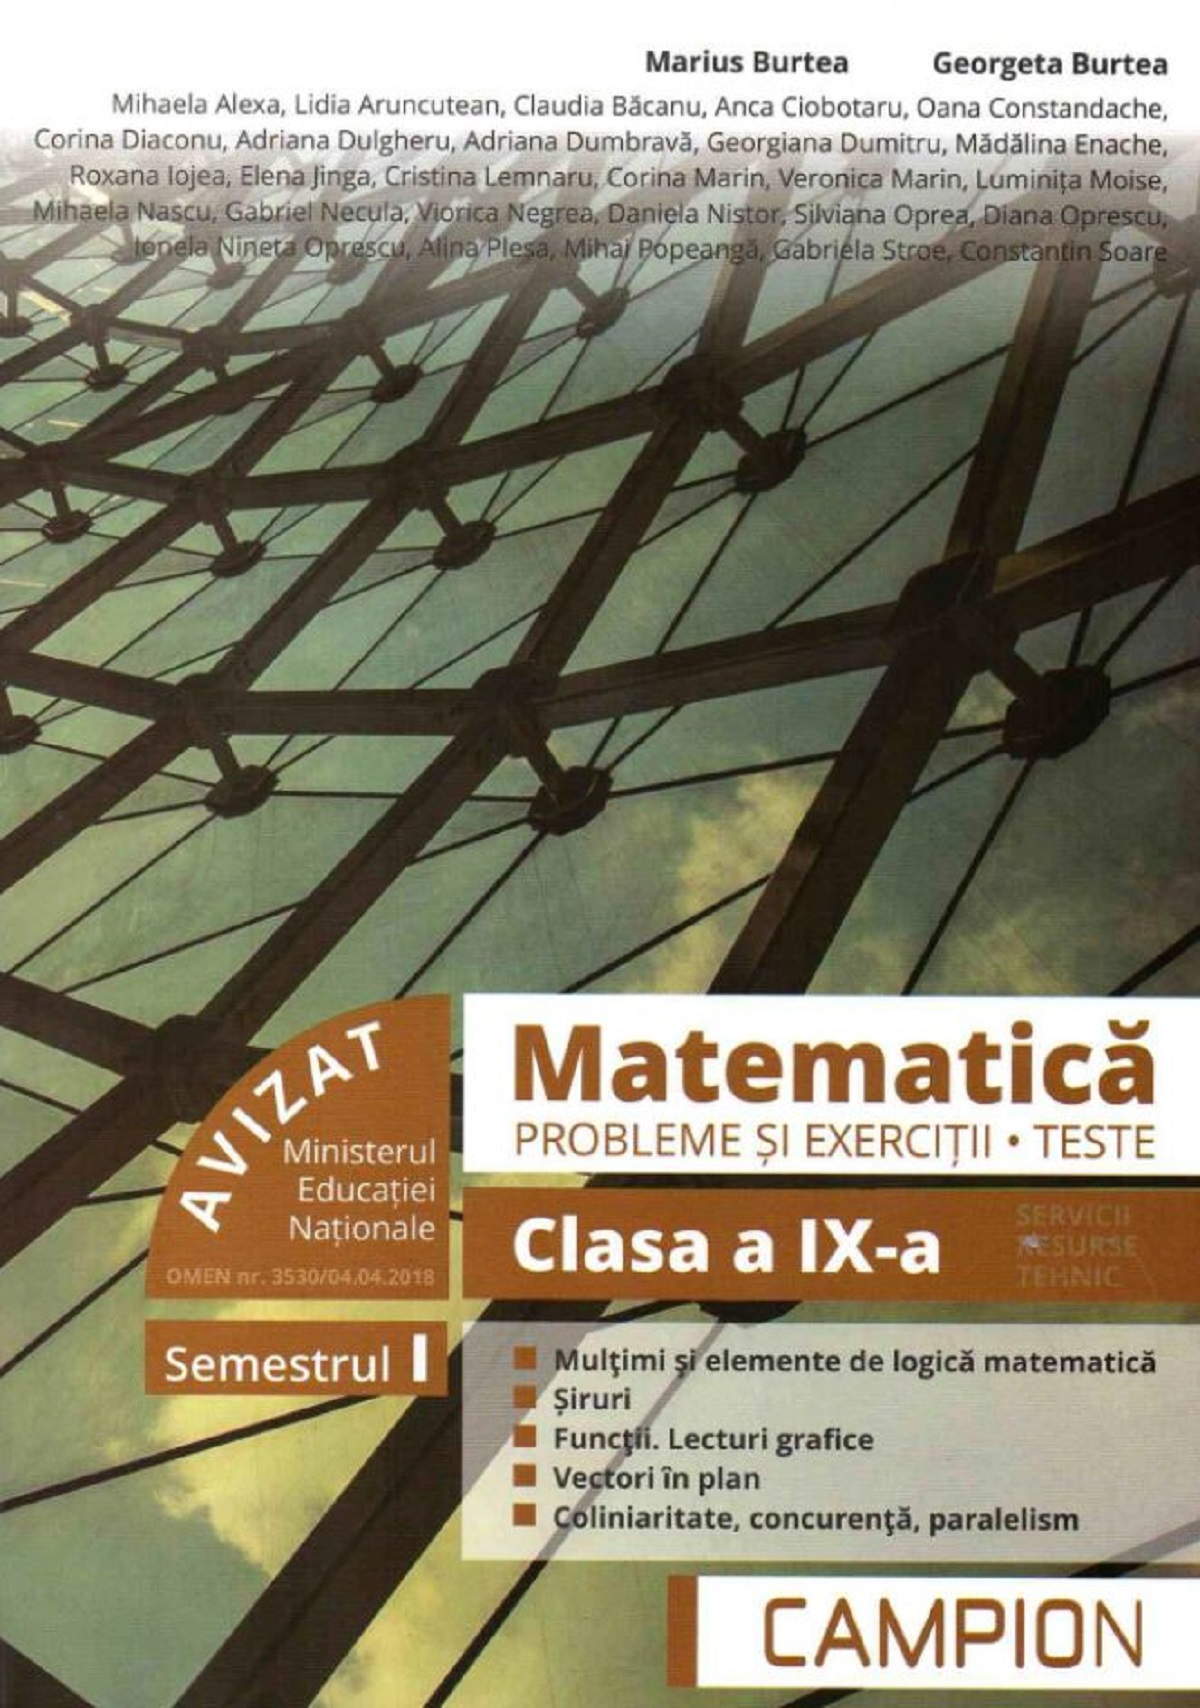 Matematica. Probleme si exercitii. Teste -  Clasa 9 Sem.1 - Marius Burtea, Georgeta Burtea